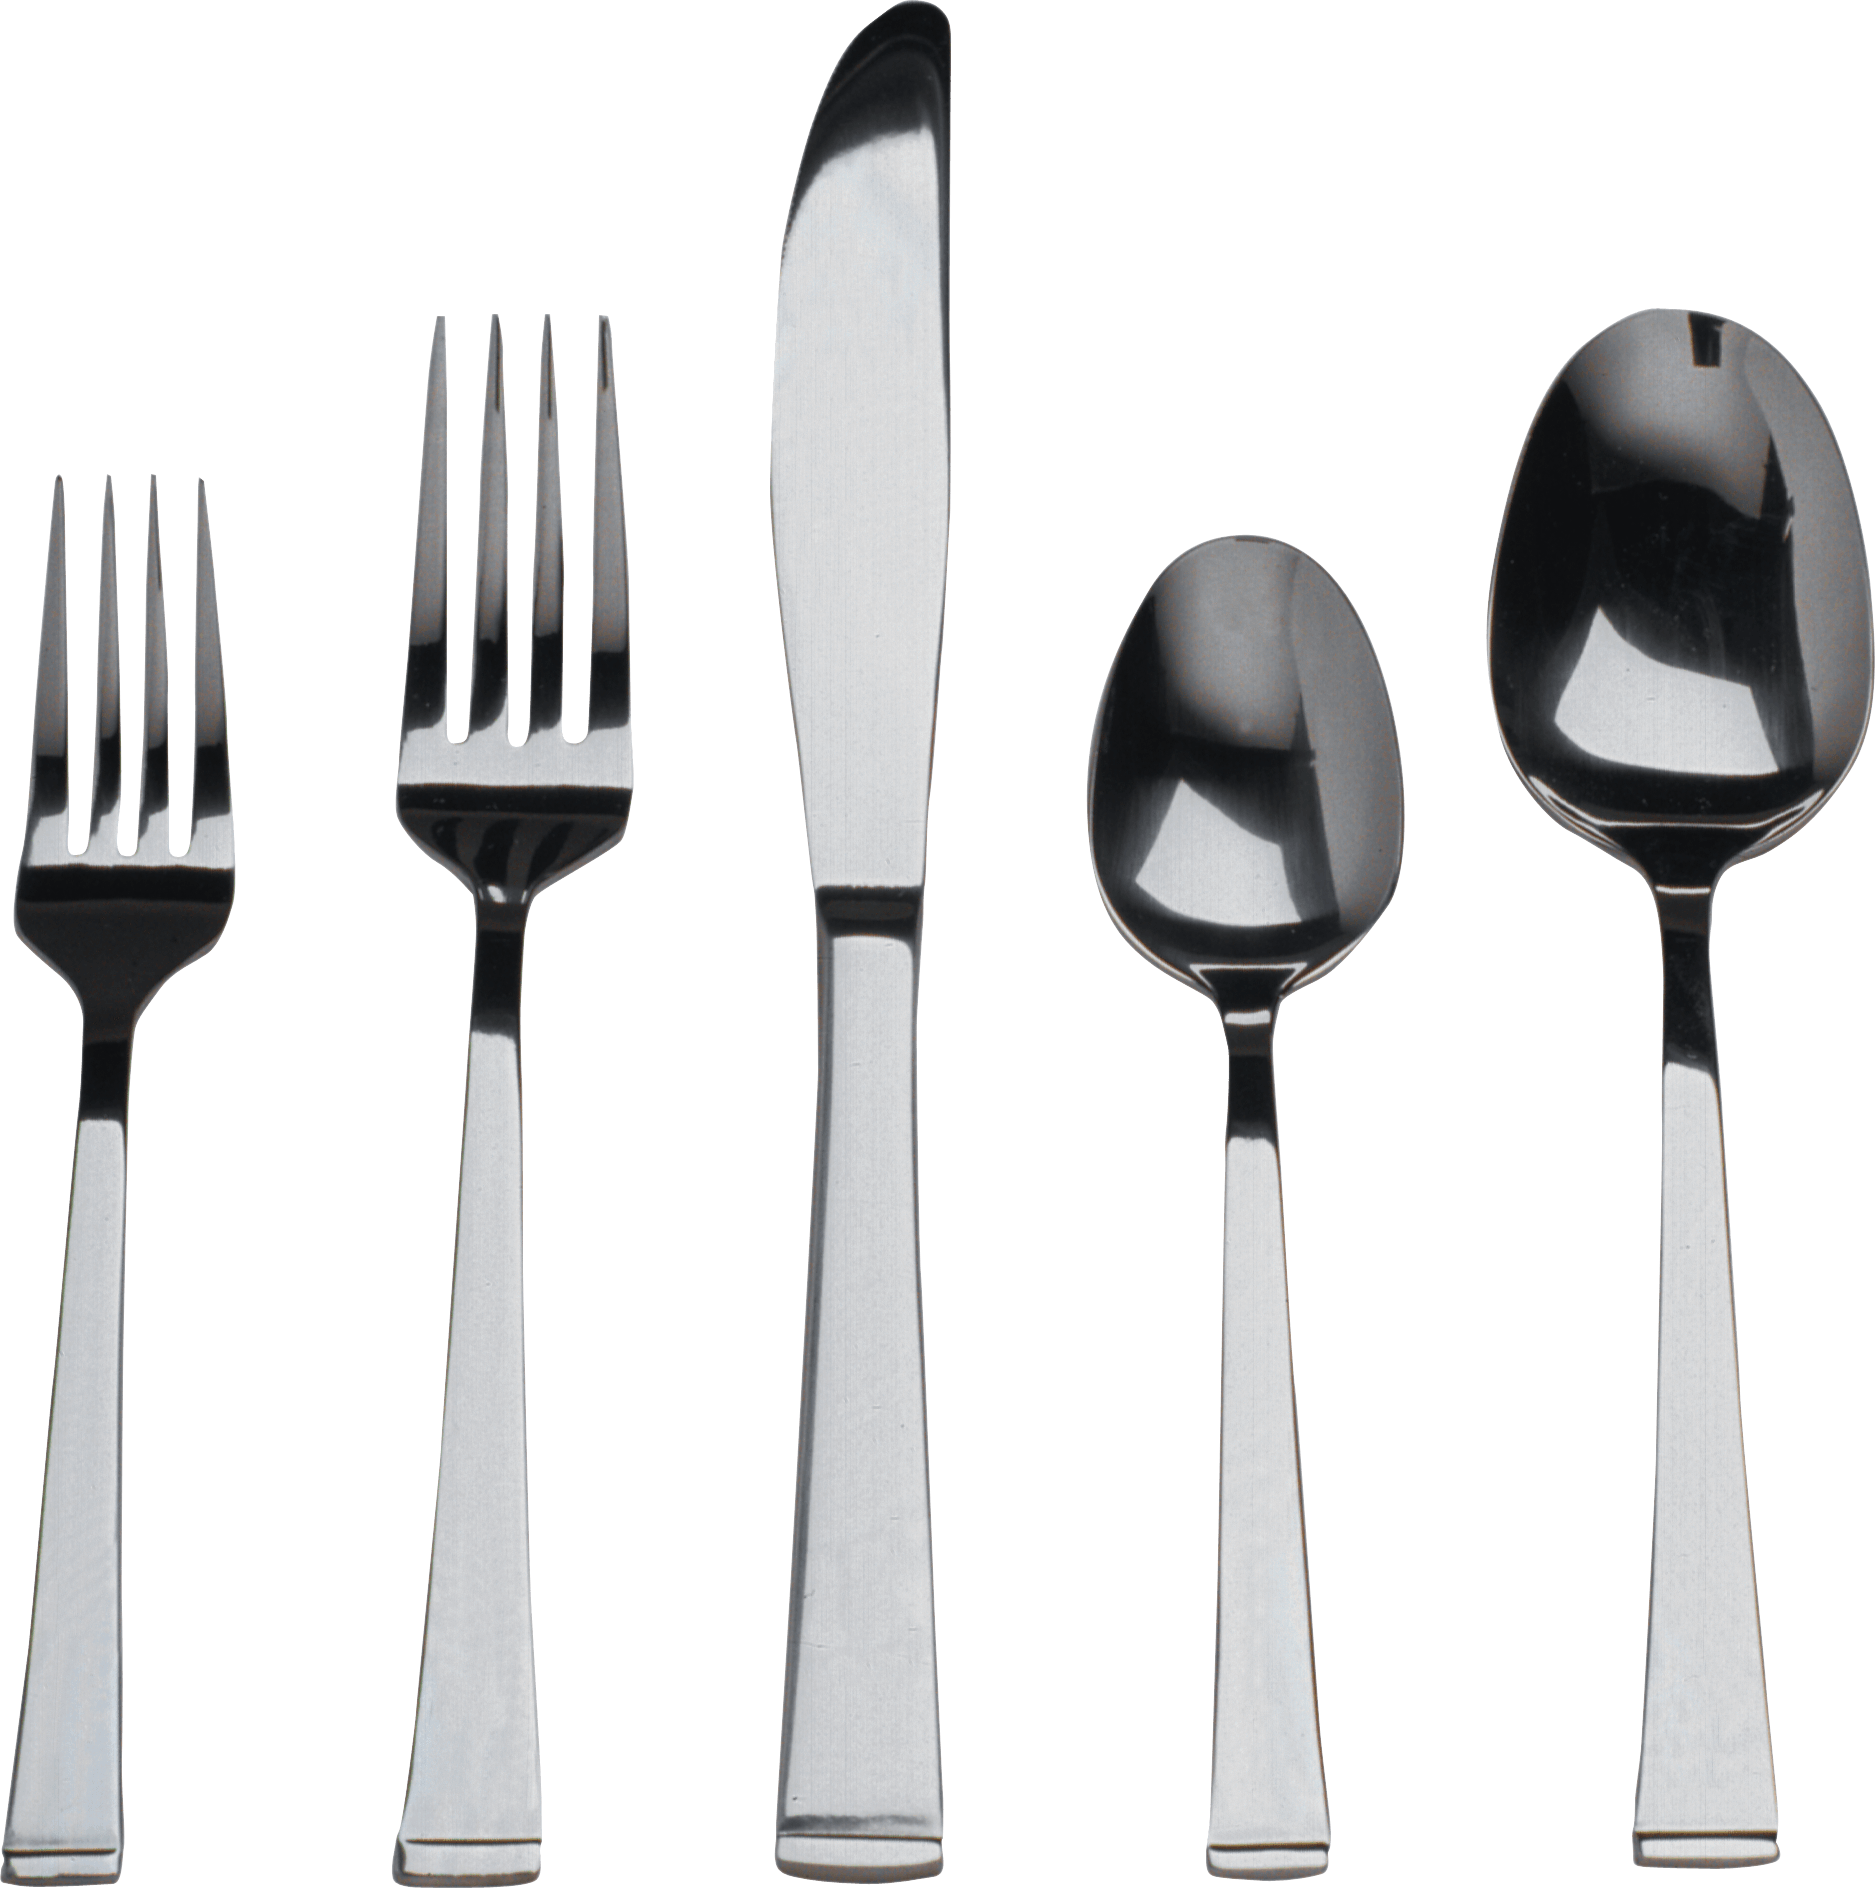 Spoons Forks Knives Png Image PNG Image